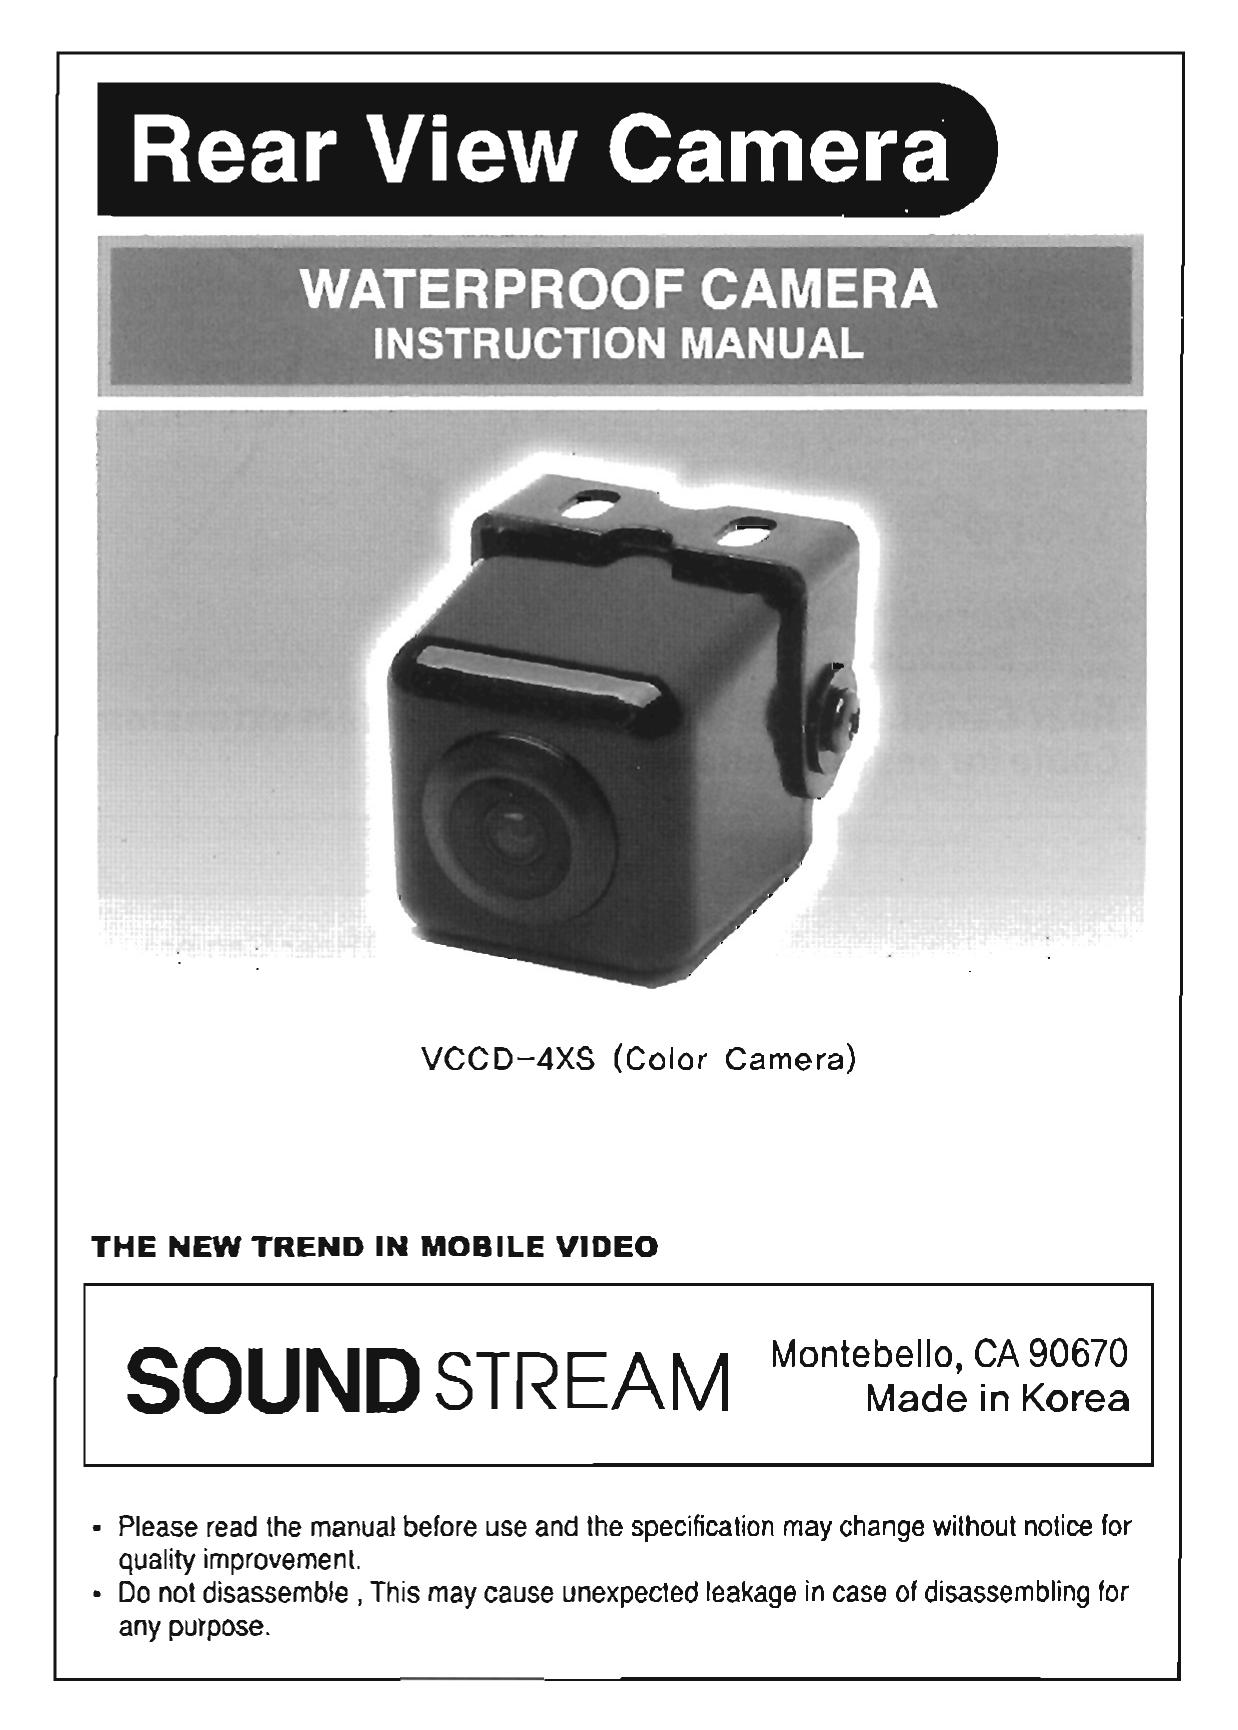 Sound Stream VCCD-4XS Digital Camera User Manual